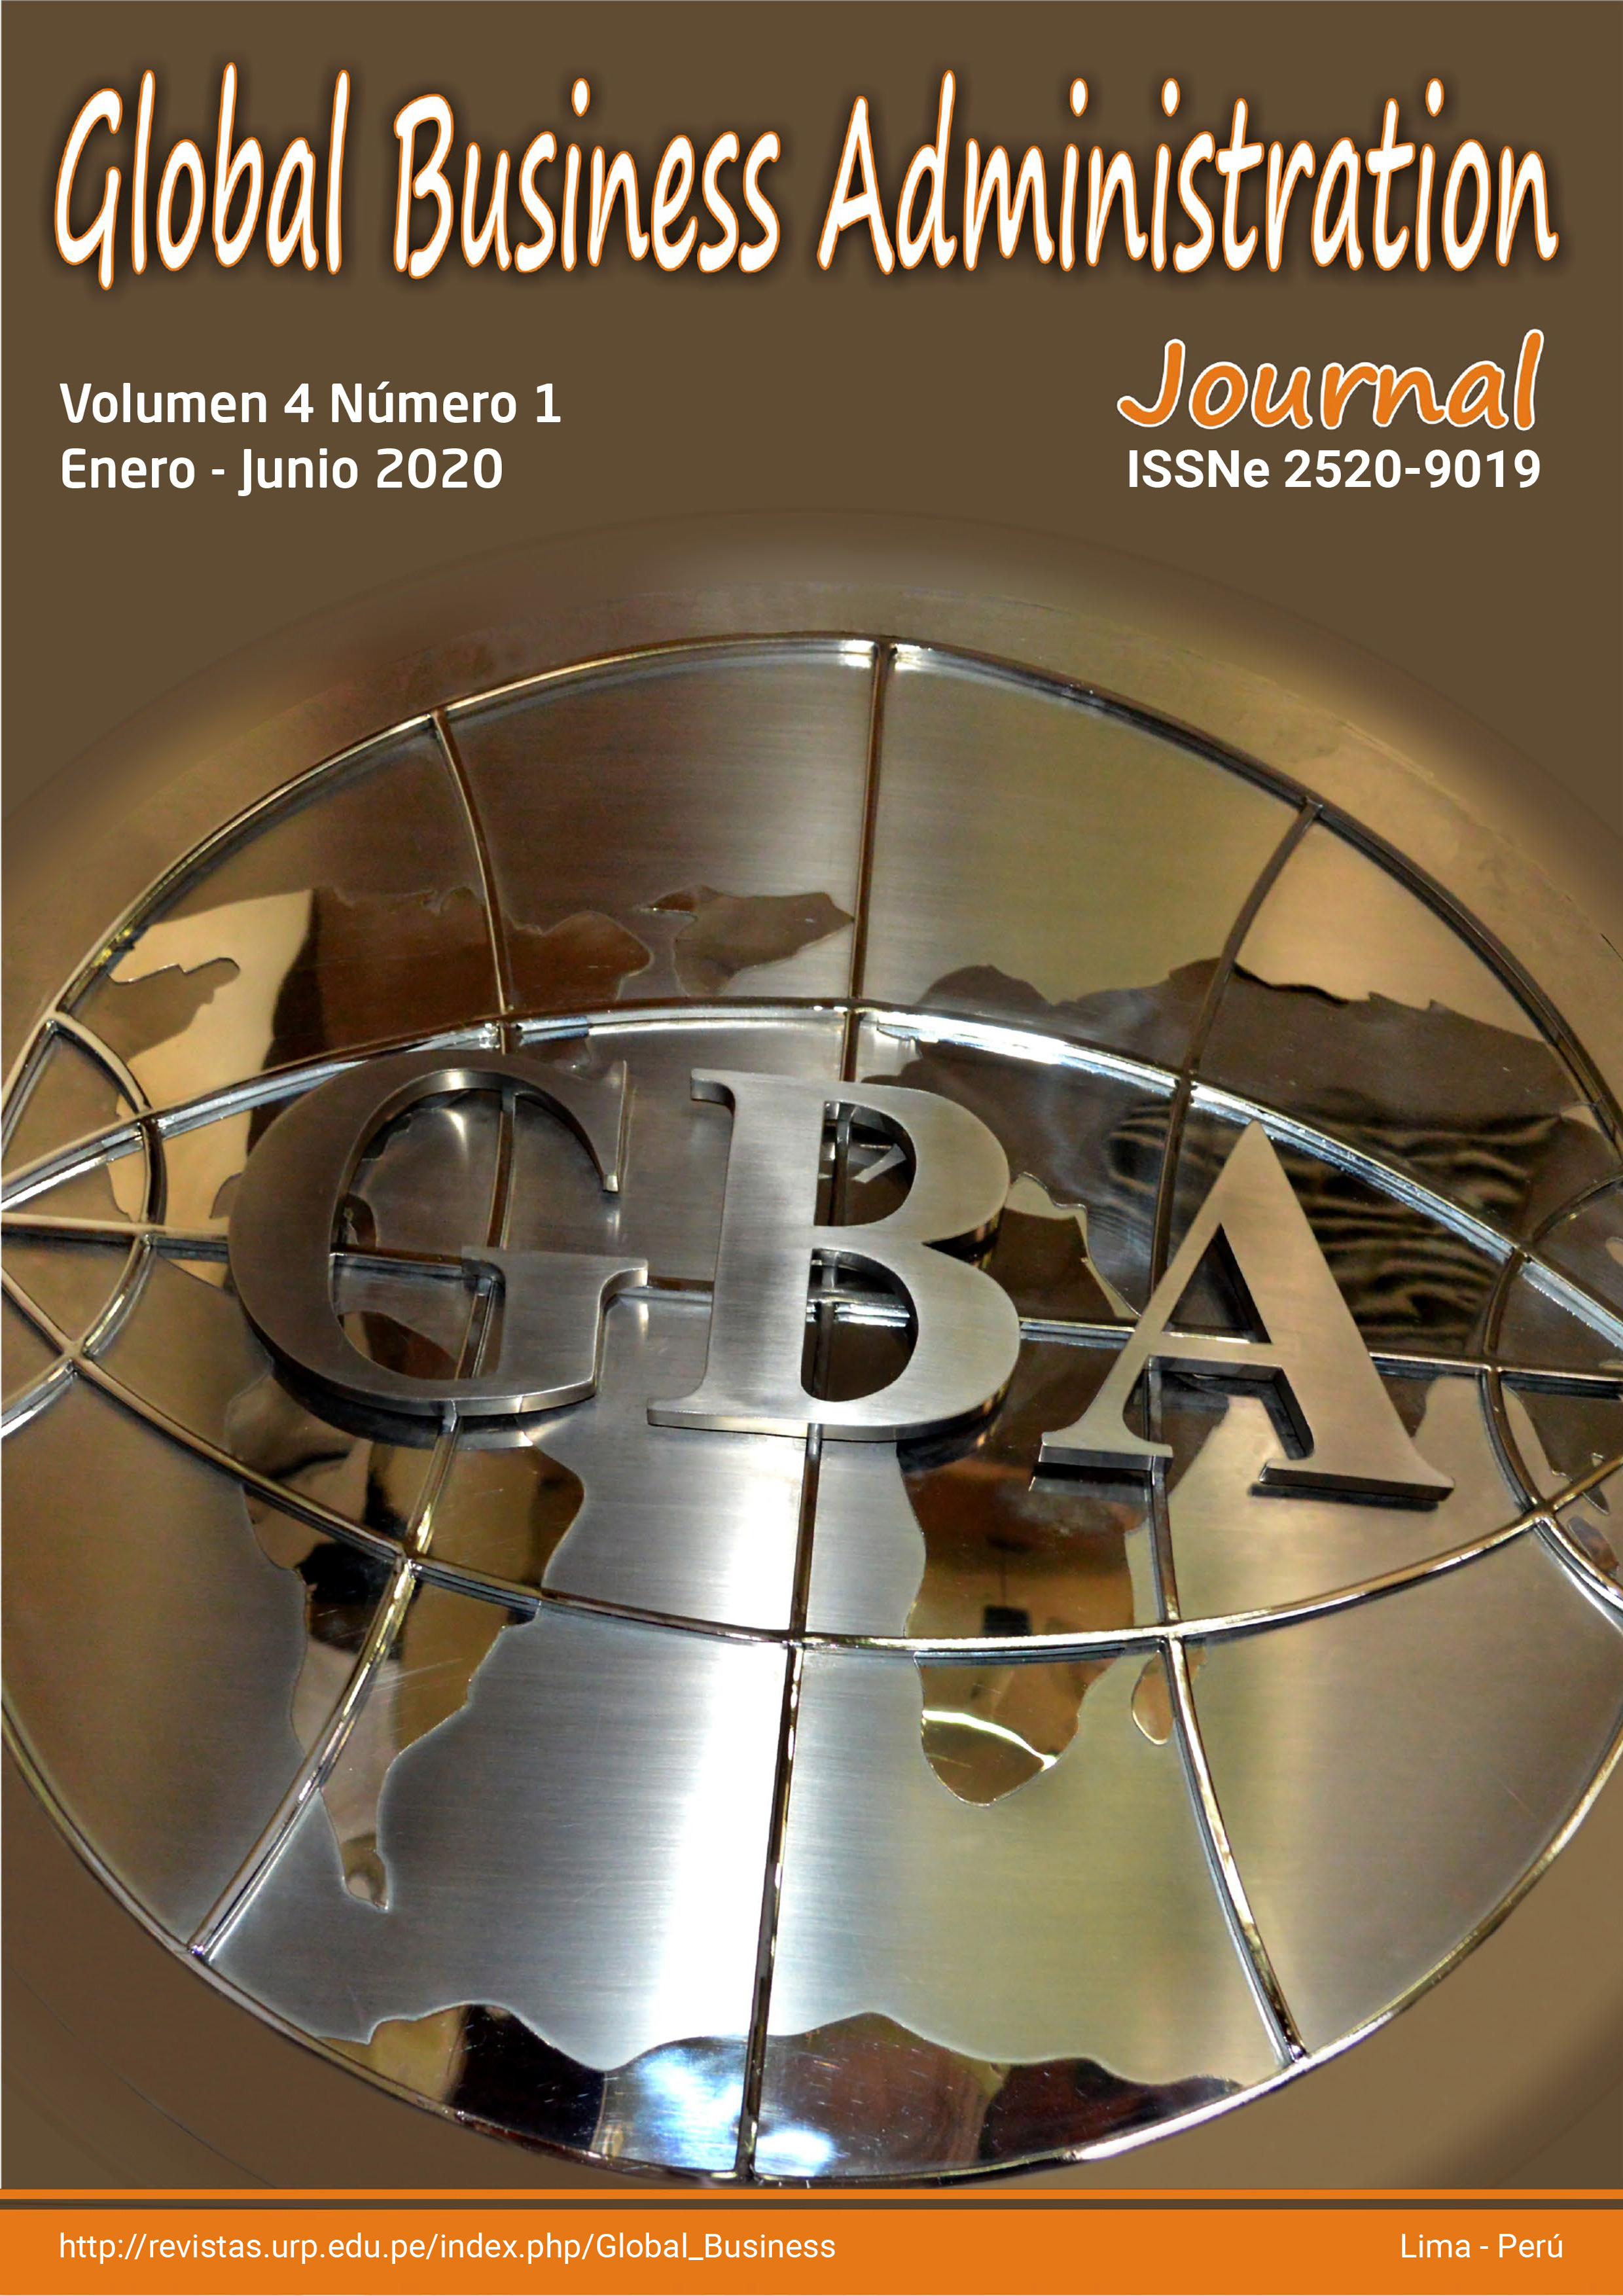 					Ver Vol. 4 Núm. 1 (2020): GLOBAL BUSINESS ADMINISTRATION JOURNAL
				